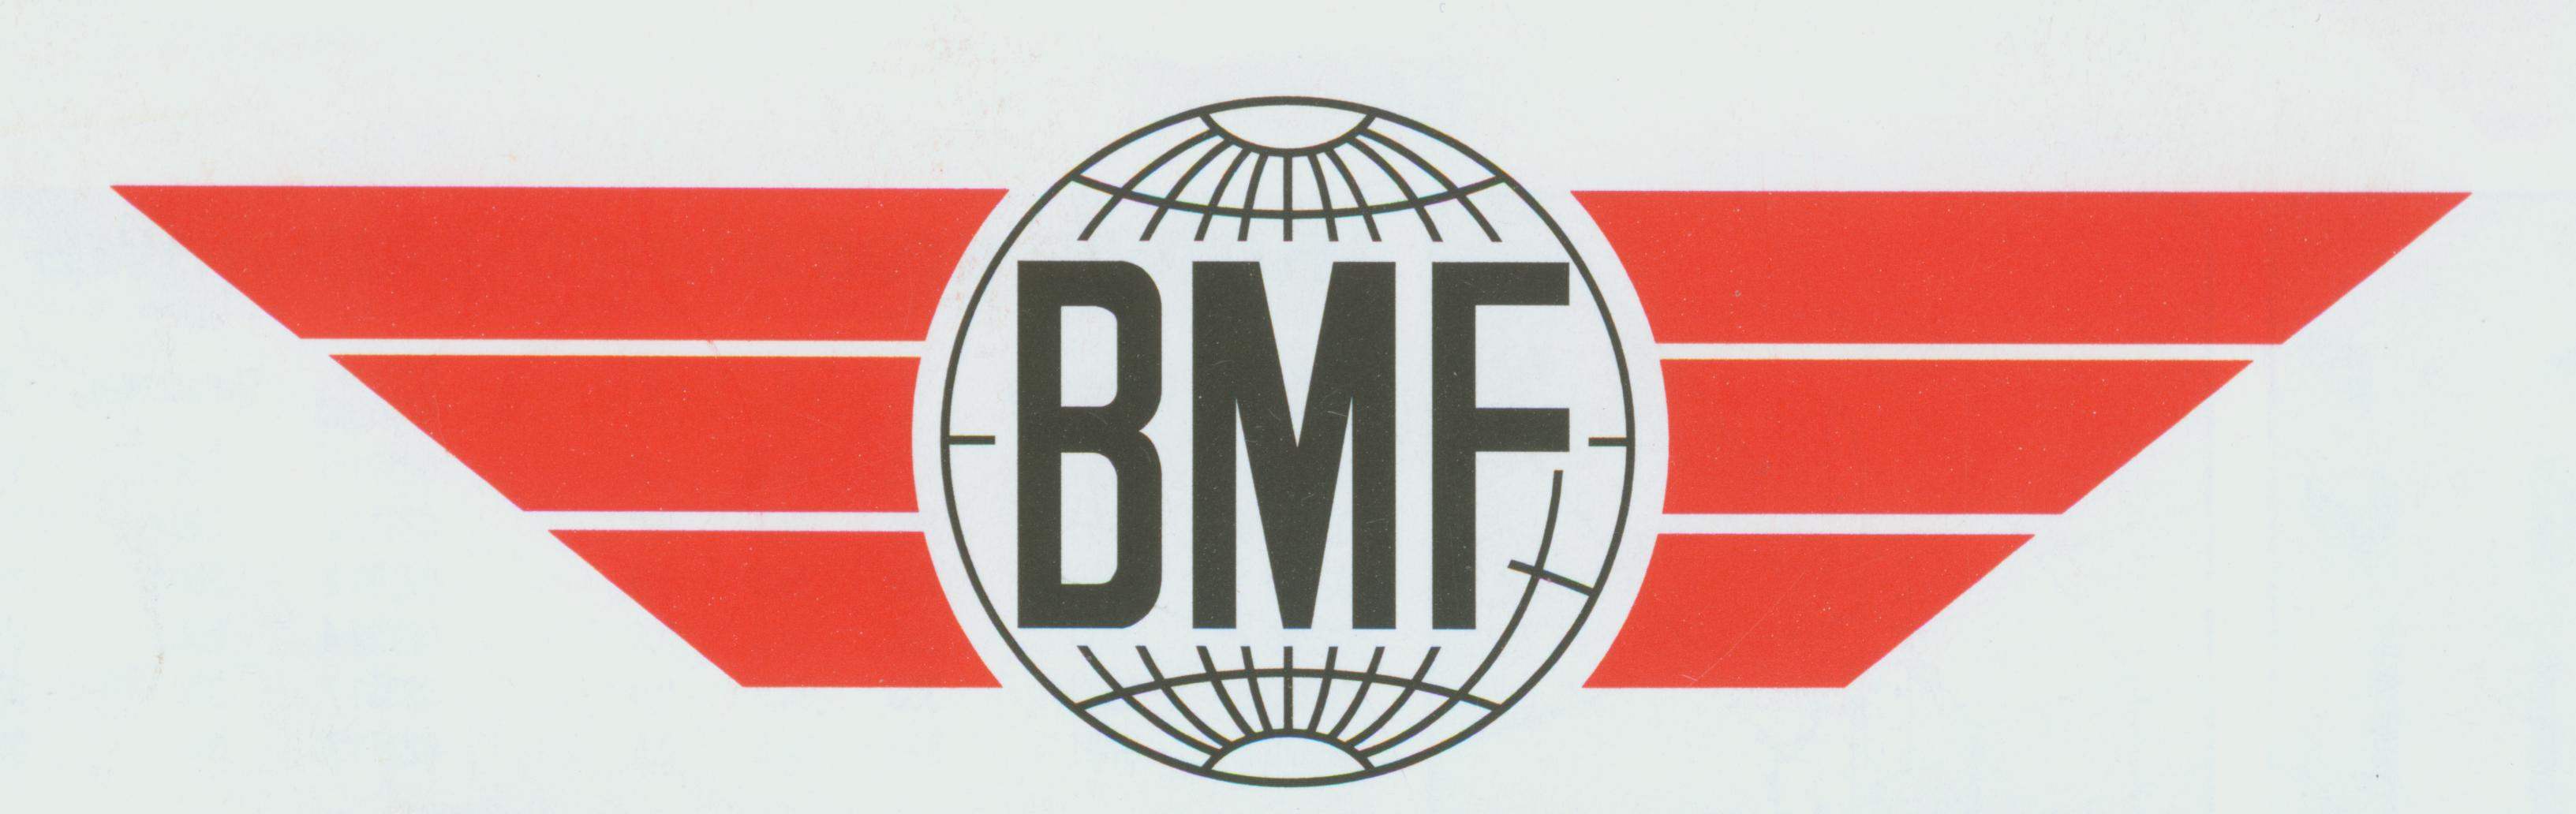 bmf001.jpg